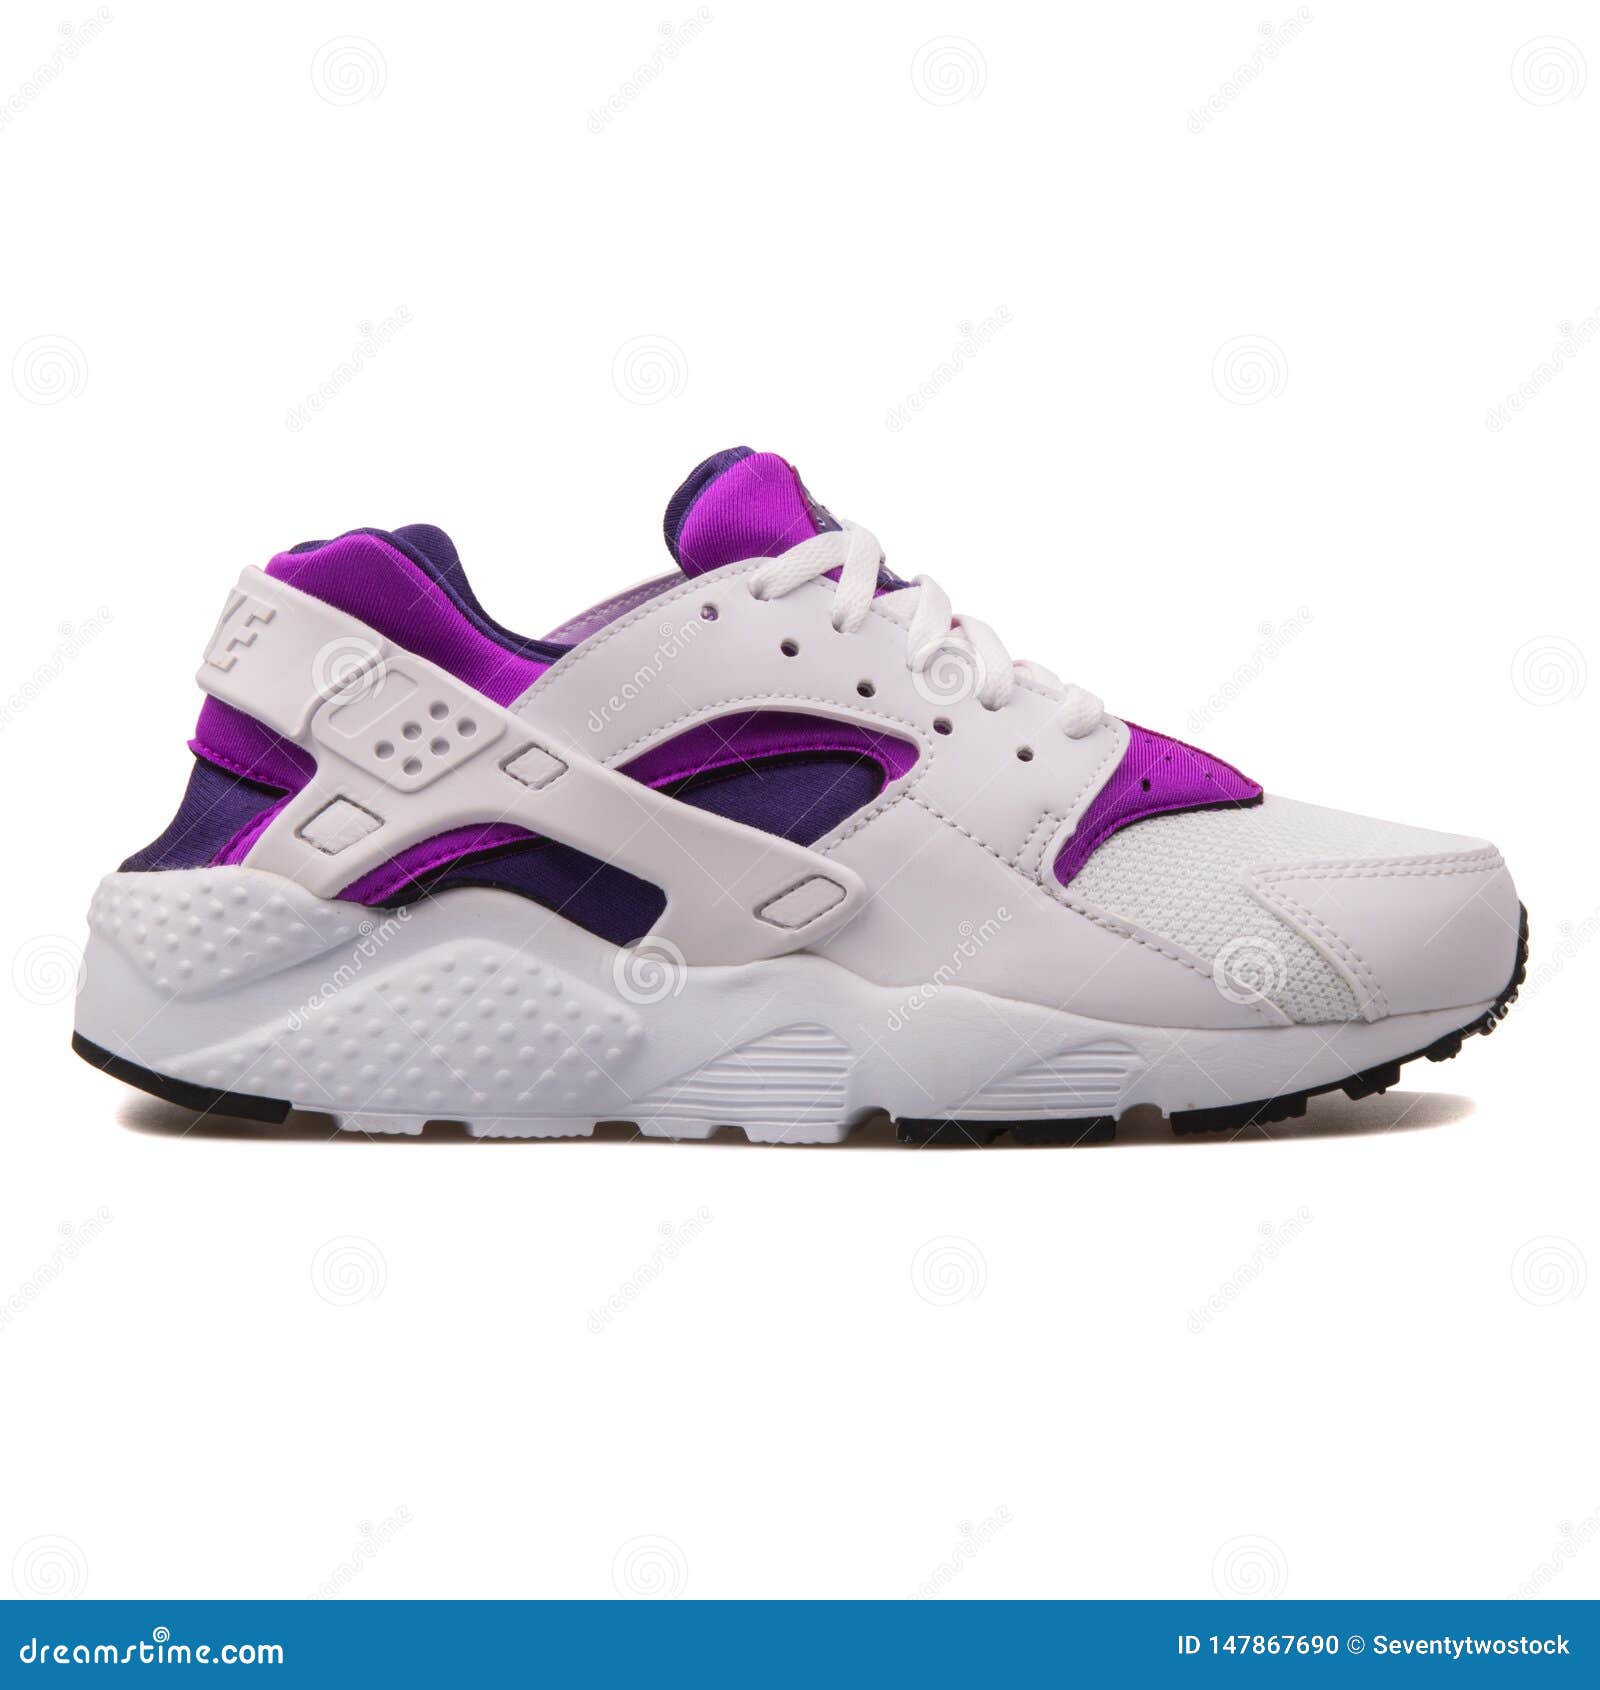 Nike Huarache Run White And Violet Sneaker Editorial Image - Image of  kicks, sneakers: 147867690